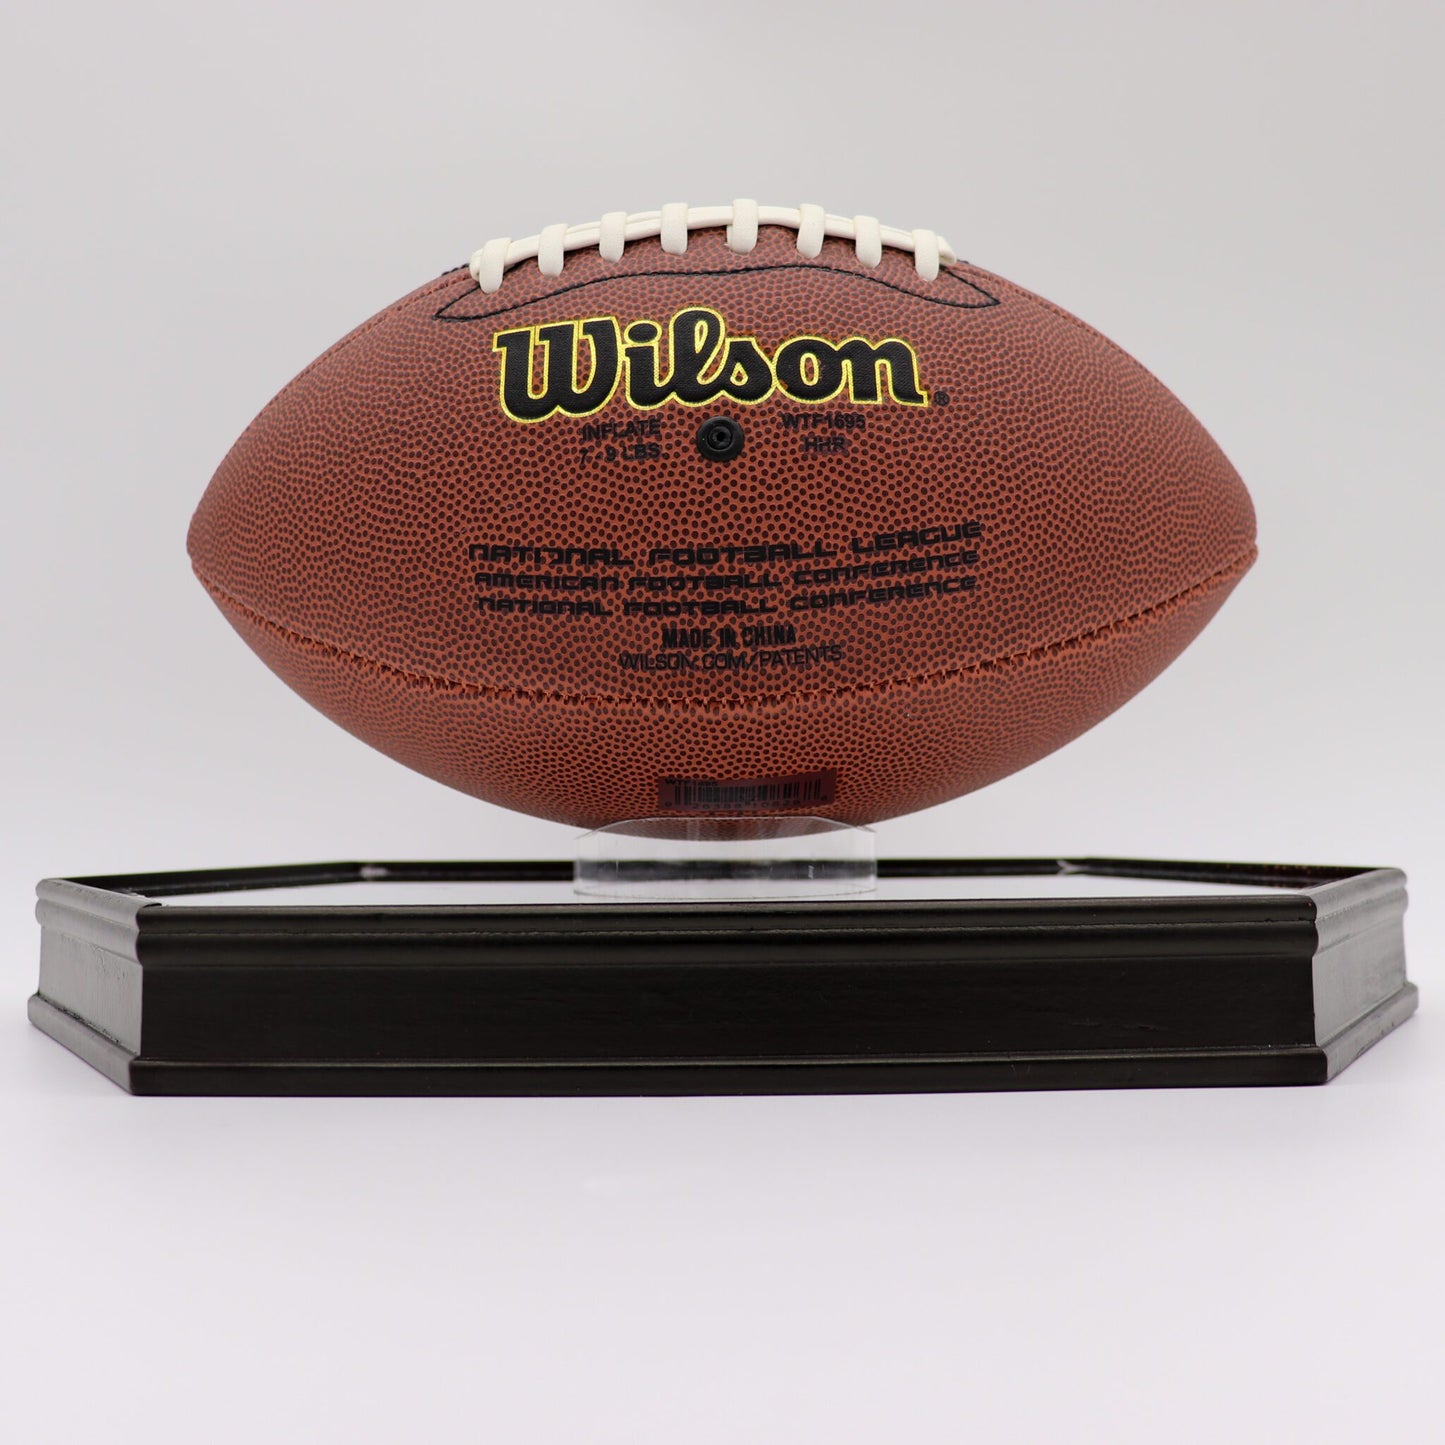 Super Bowl 50 Champion Chris Harris Autographed NFL Game Ball